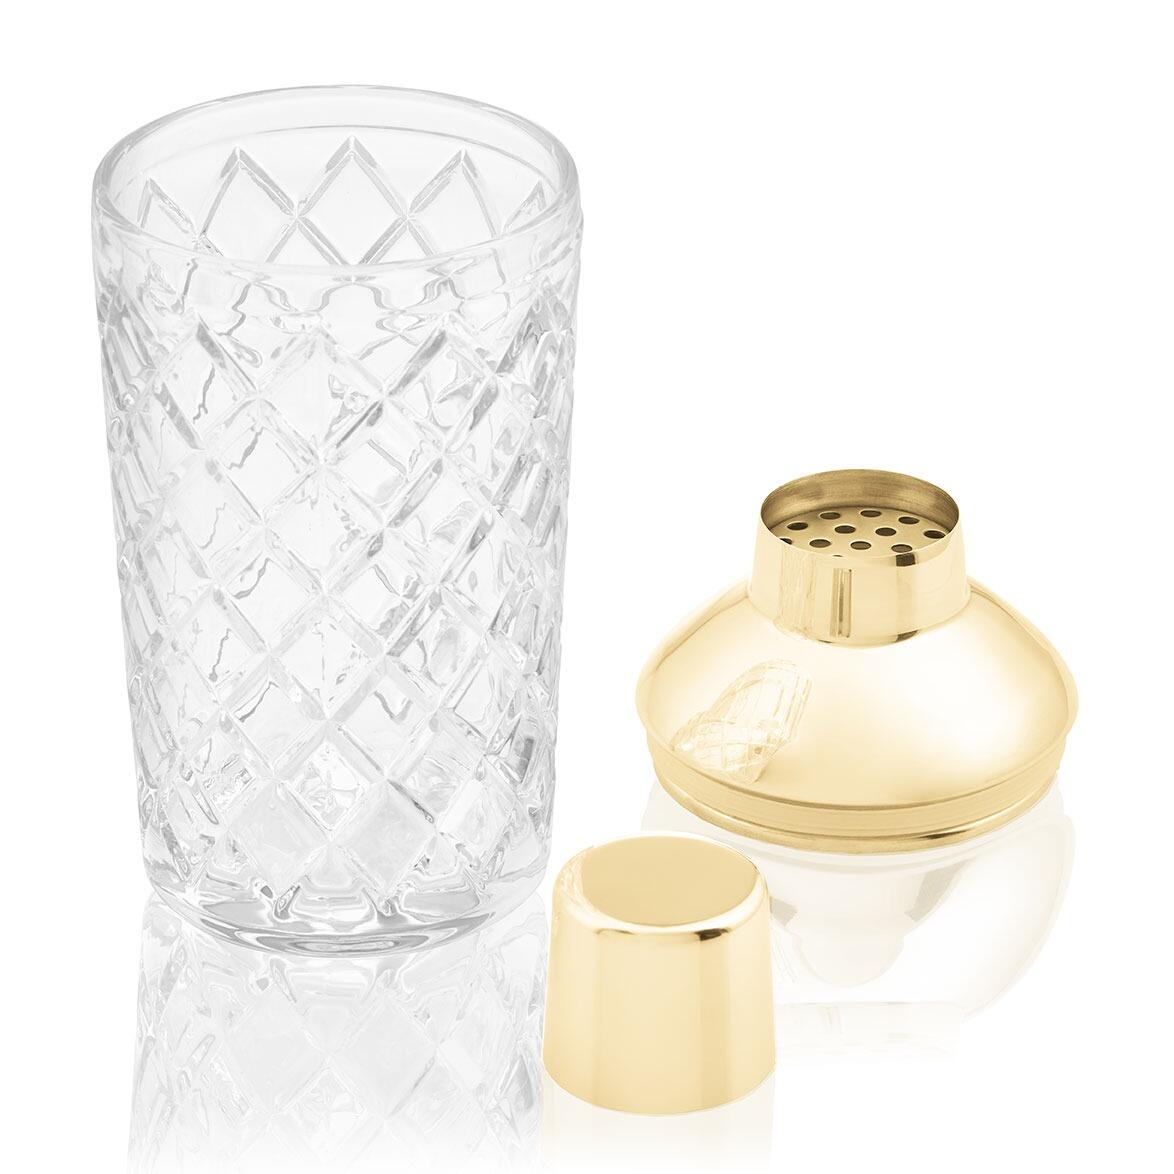 Uberstar Classic Cut Glass Cocktail Shaker (Gold)